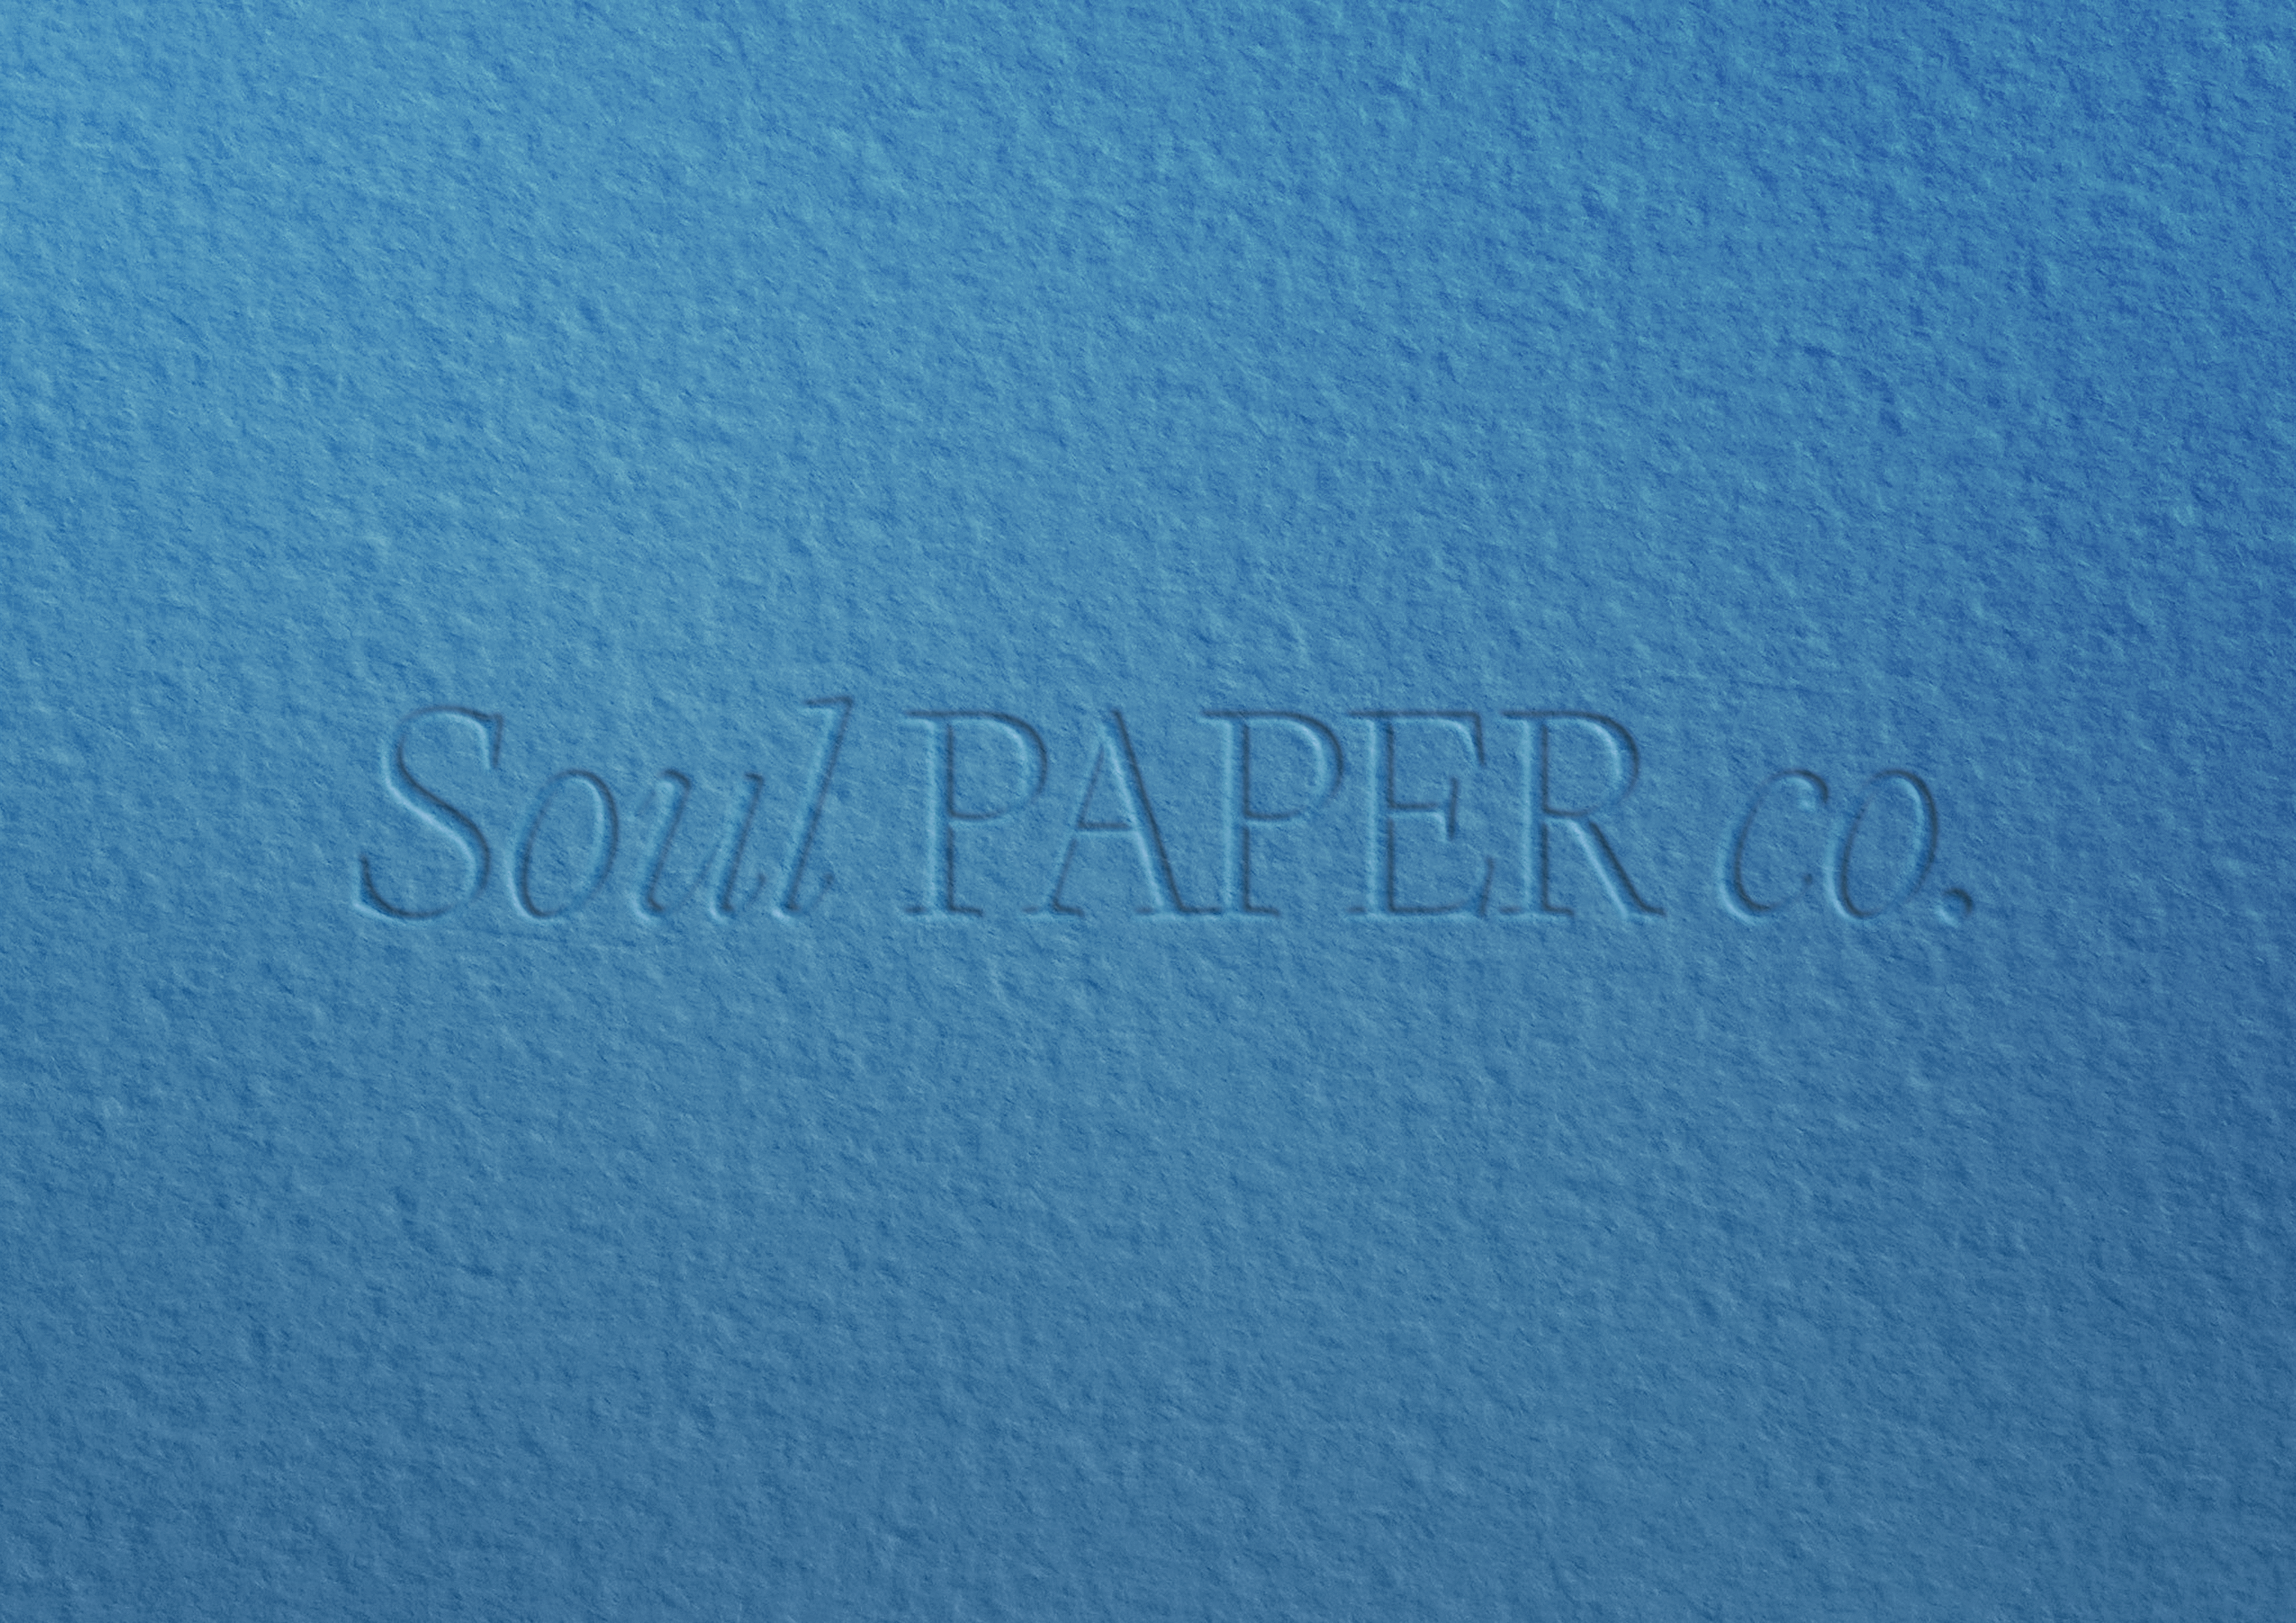 brand identity for stationery brand Soul Paper Co. brand design, logo design, | AHBC Group branding agency, marketing agency Miami